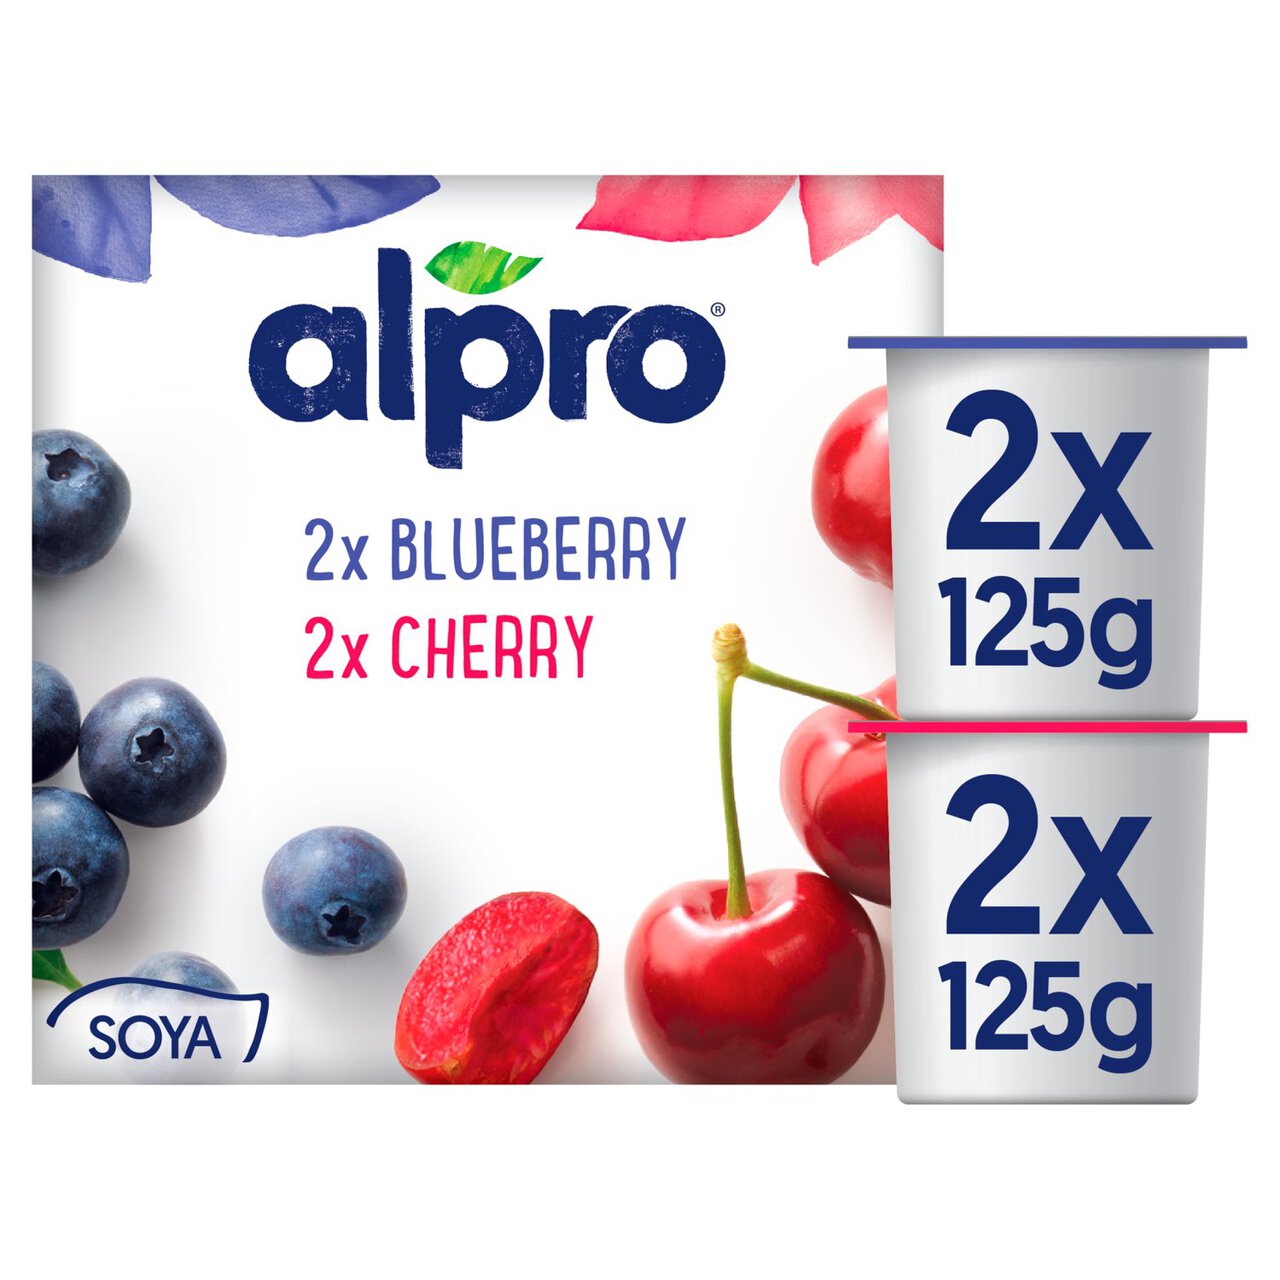 Alpro Blueberry & Cherry Yoghurt Alternative 4 x 125g